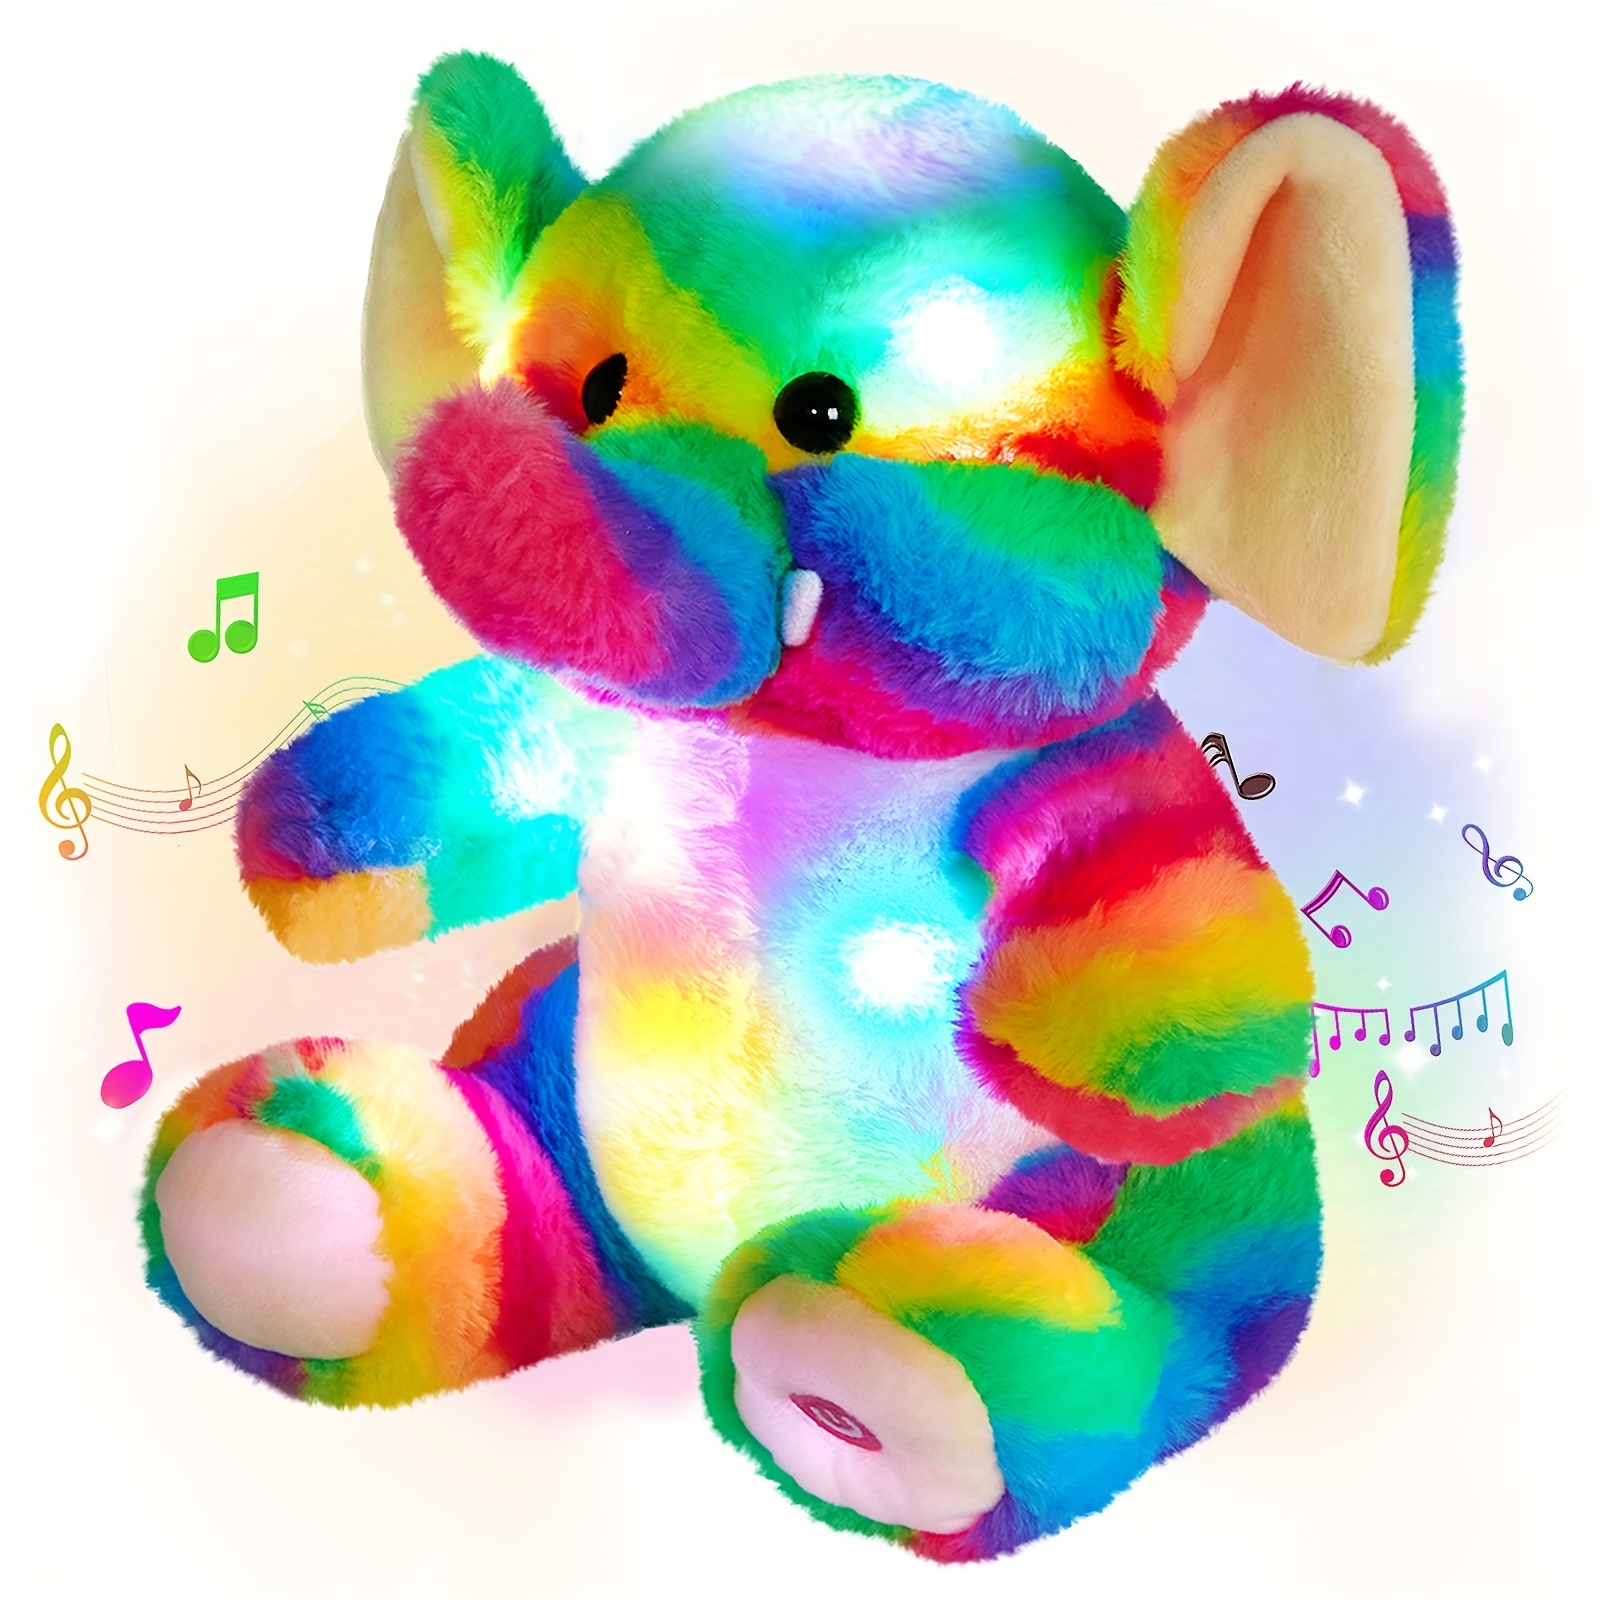 https://img.kwcdn.com/product/glowing-music-rainbow-plush-toy/d69d2f15w98k18-22fb454b/Fancyalgo/VirtualModelMatting/c05c137f606f0326ed51d640f71bf9a5.jpg